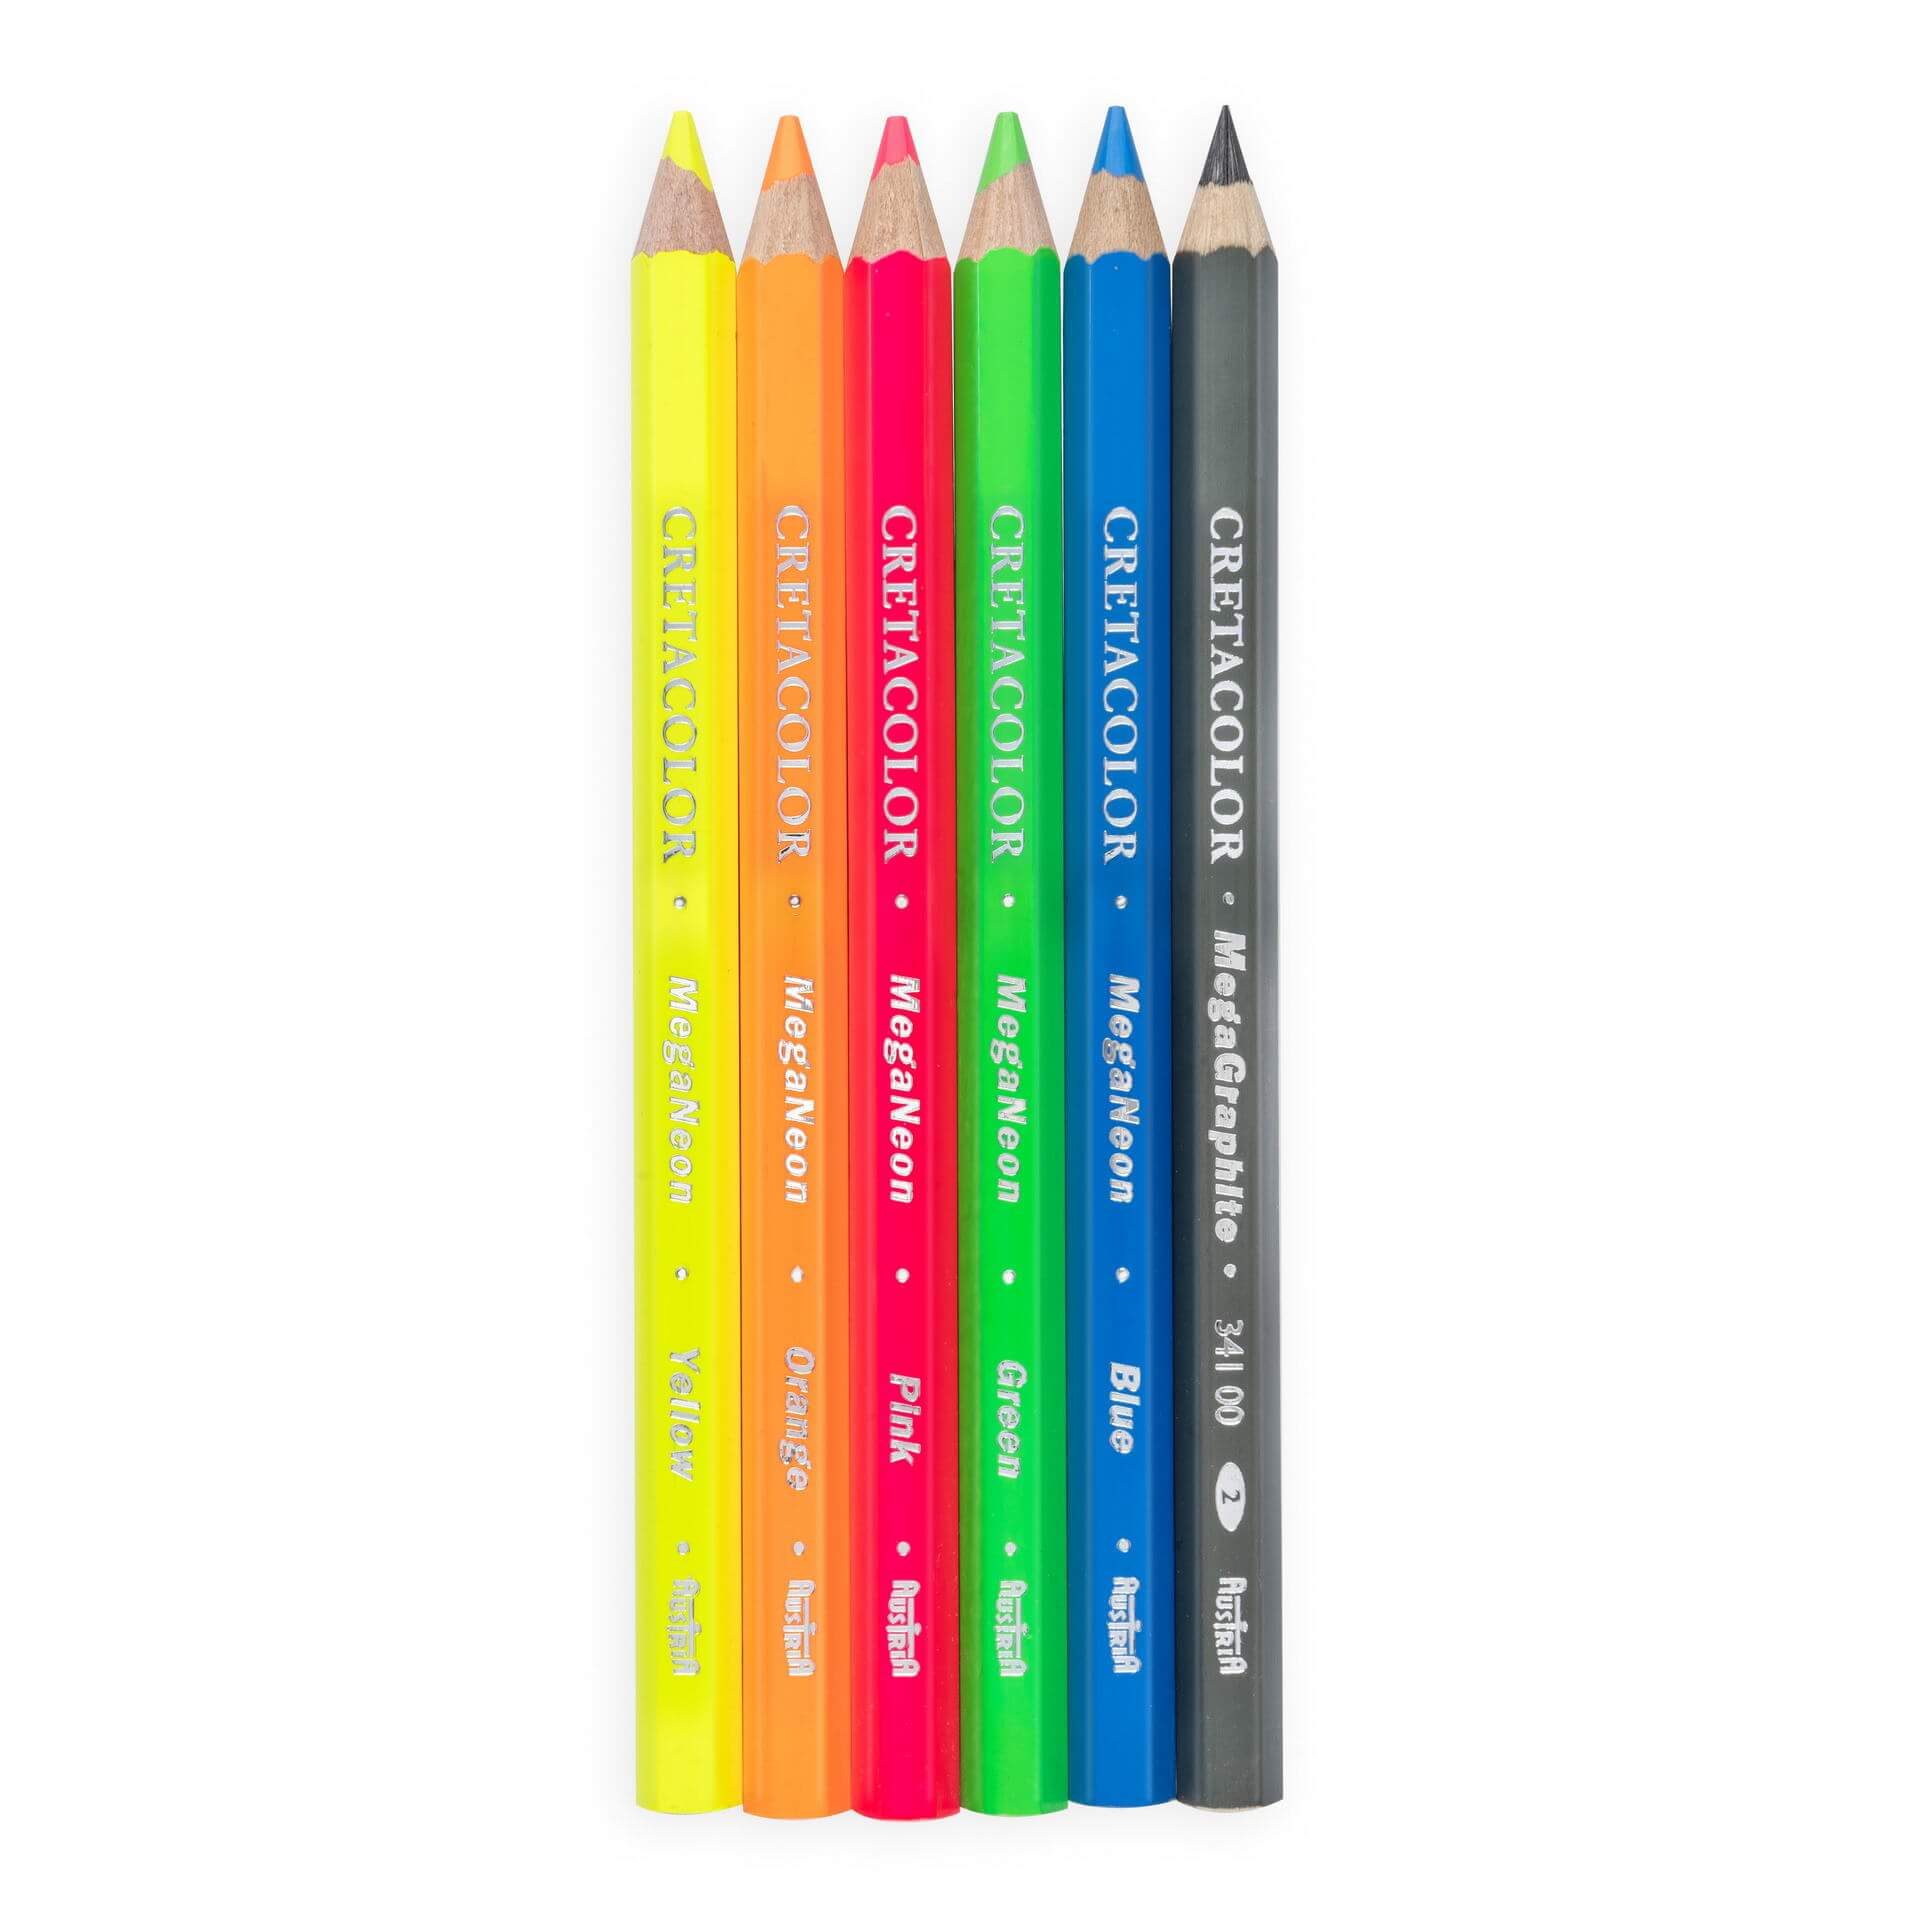 Cretacolor Artist Studio Mega Pencils – Neon & Graphite Set Of 6